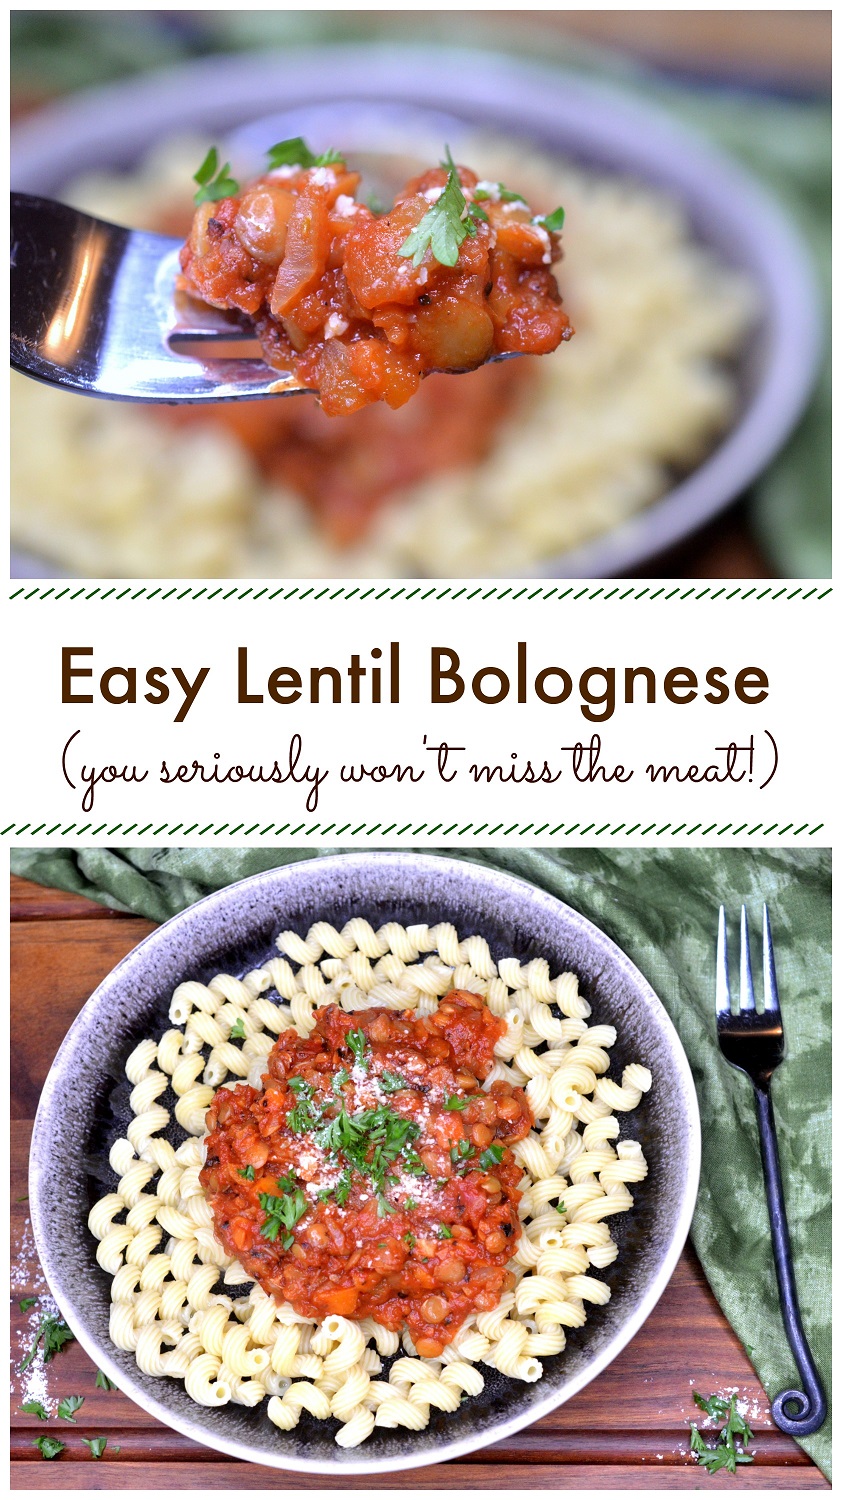 Lentil Bolognese Recipe. Vegetarian or Vegan Lentil Bolognese recipe